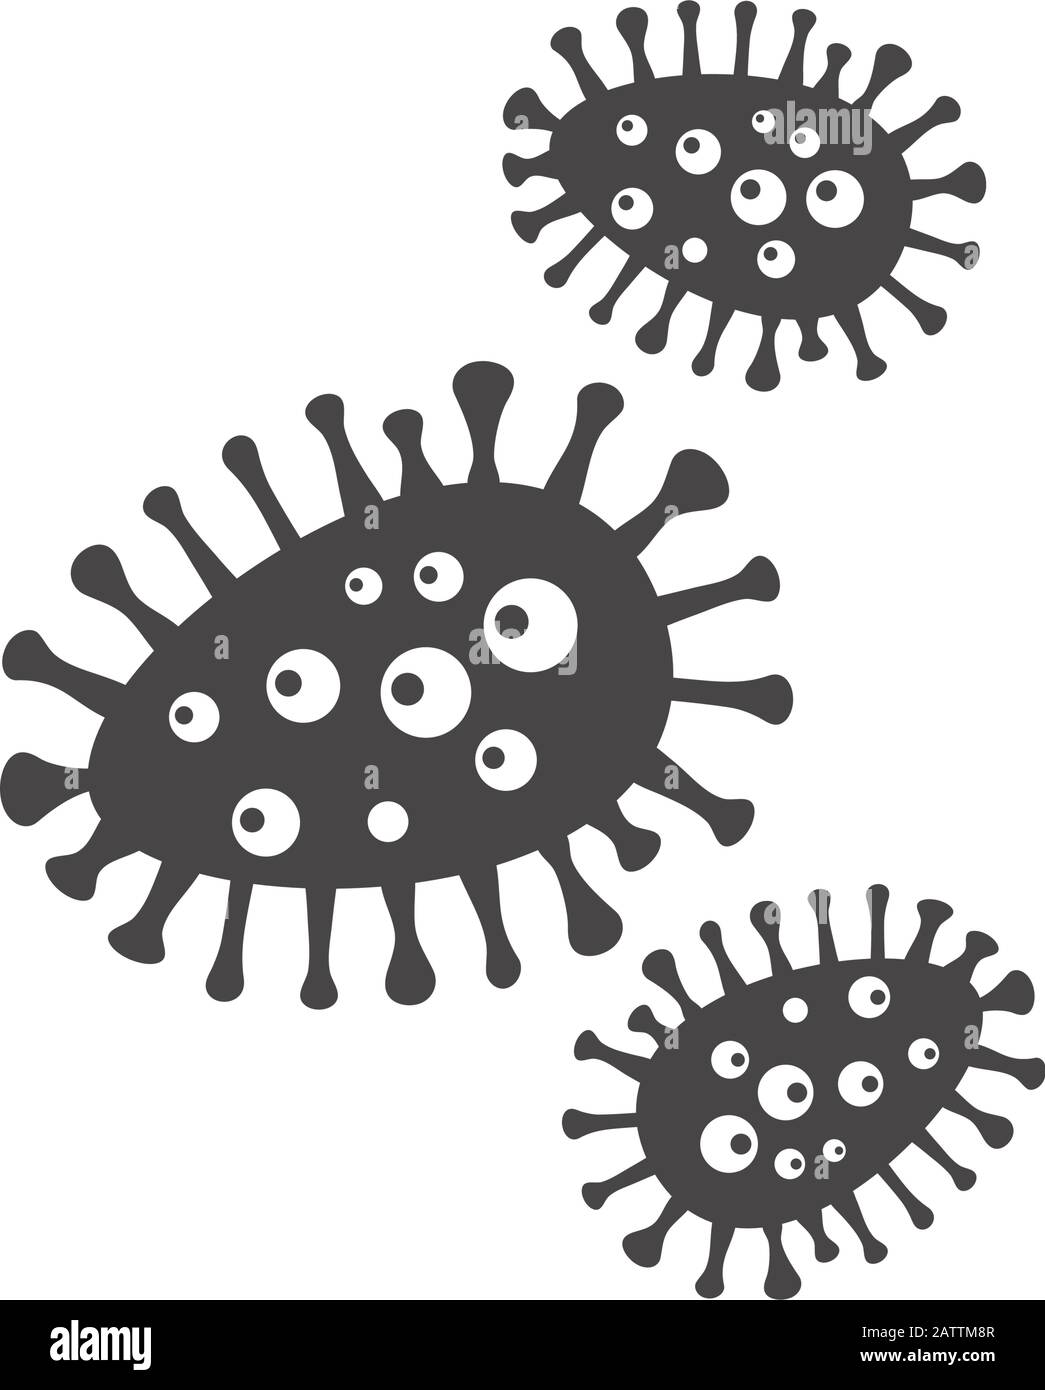 Design der Symbolvorlage für Virus-Vektor-Illustrationen Stock Vektor